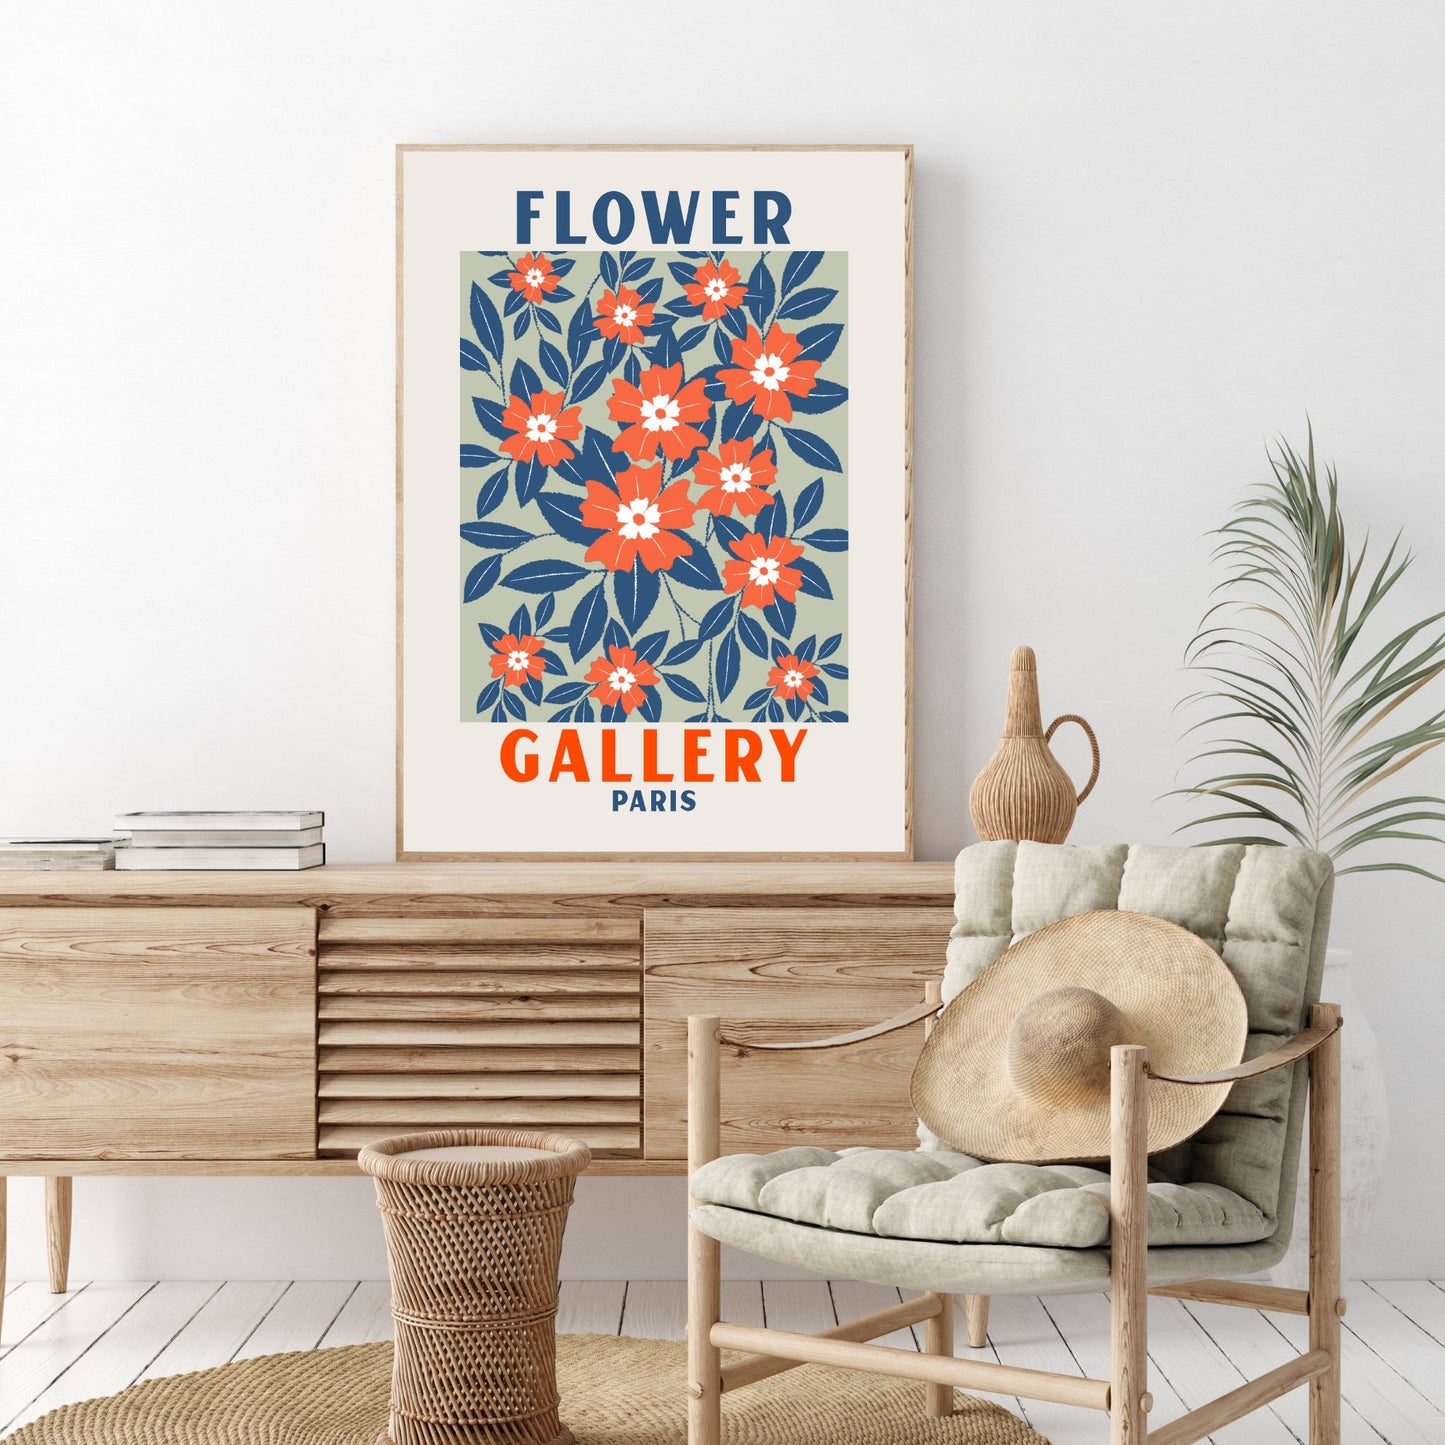 Flower Gallery Paris